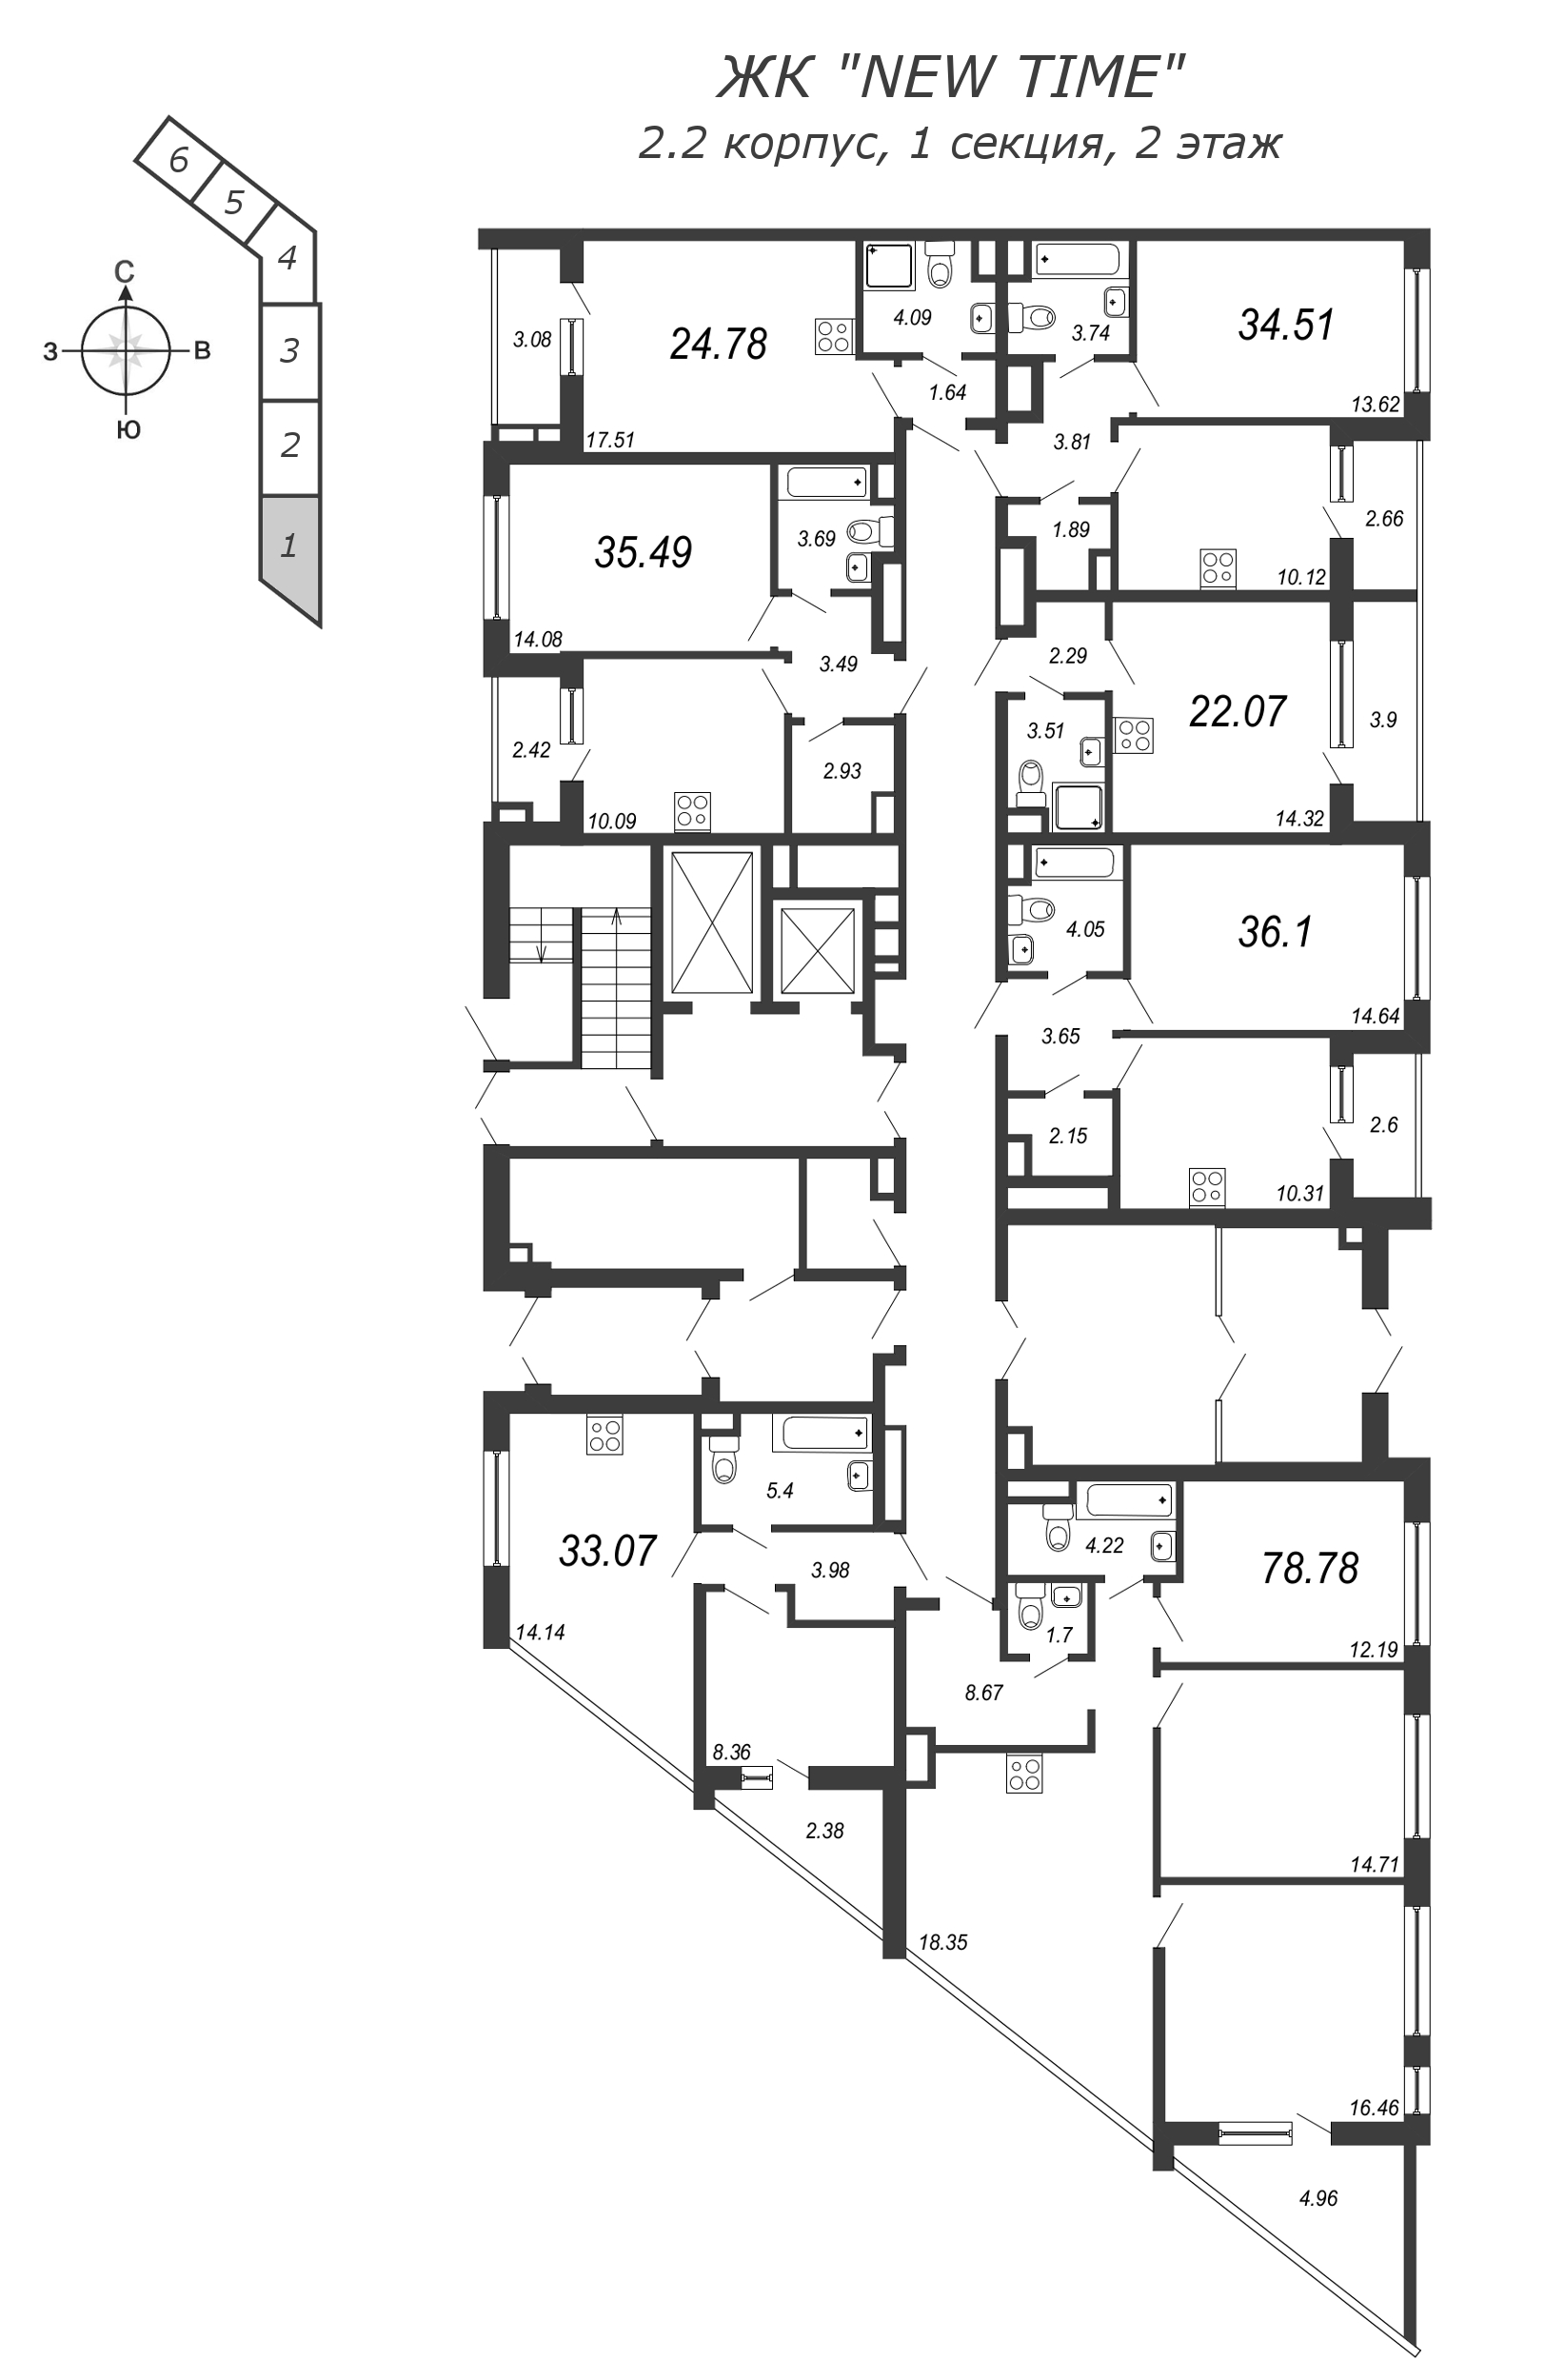 1-комнатная квартира, 36.3 м² в ЖК "NEW TIME" - планировка этажа